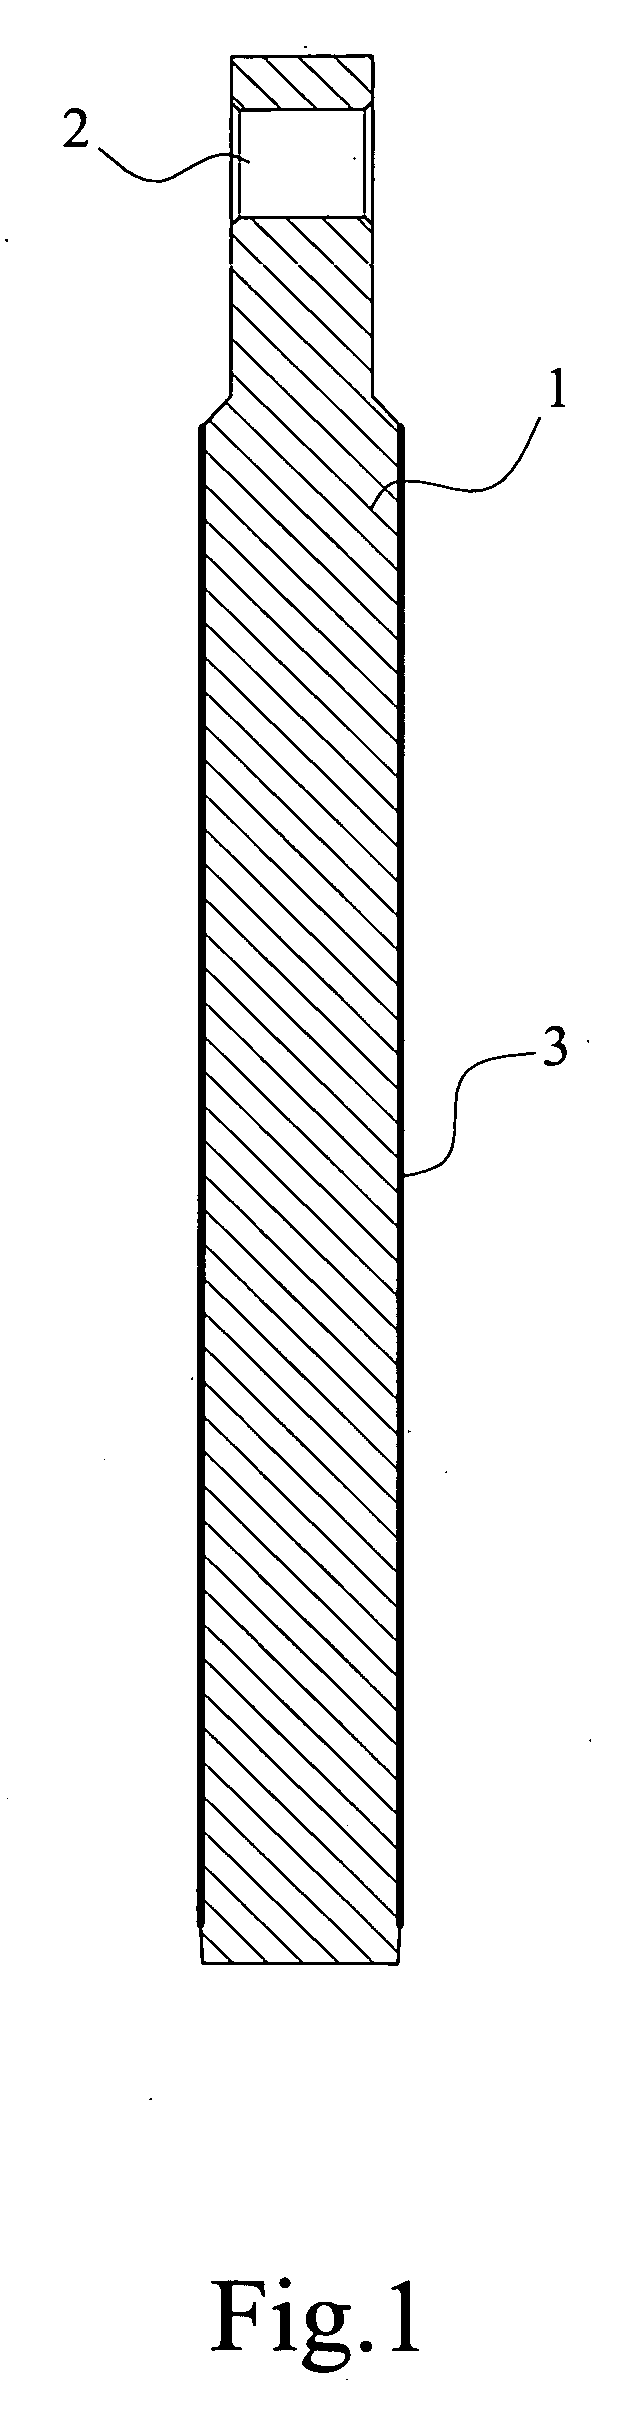 Wear-resistant plunger rod